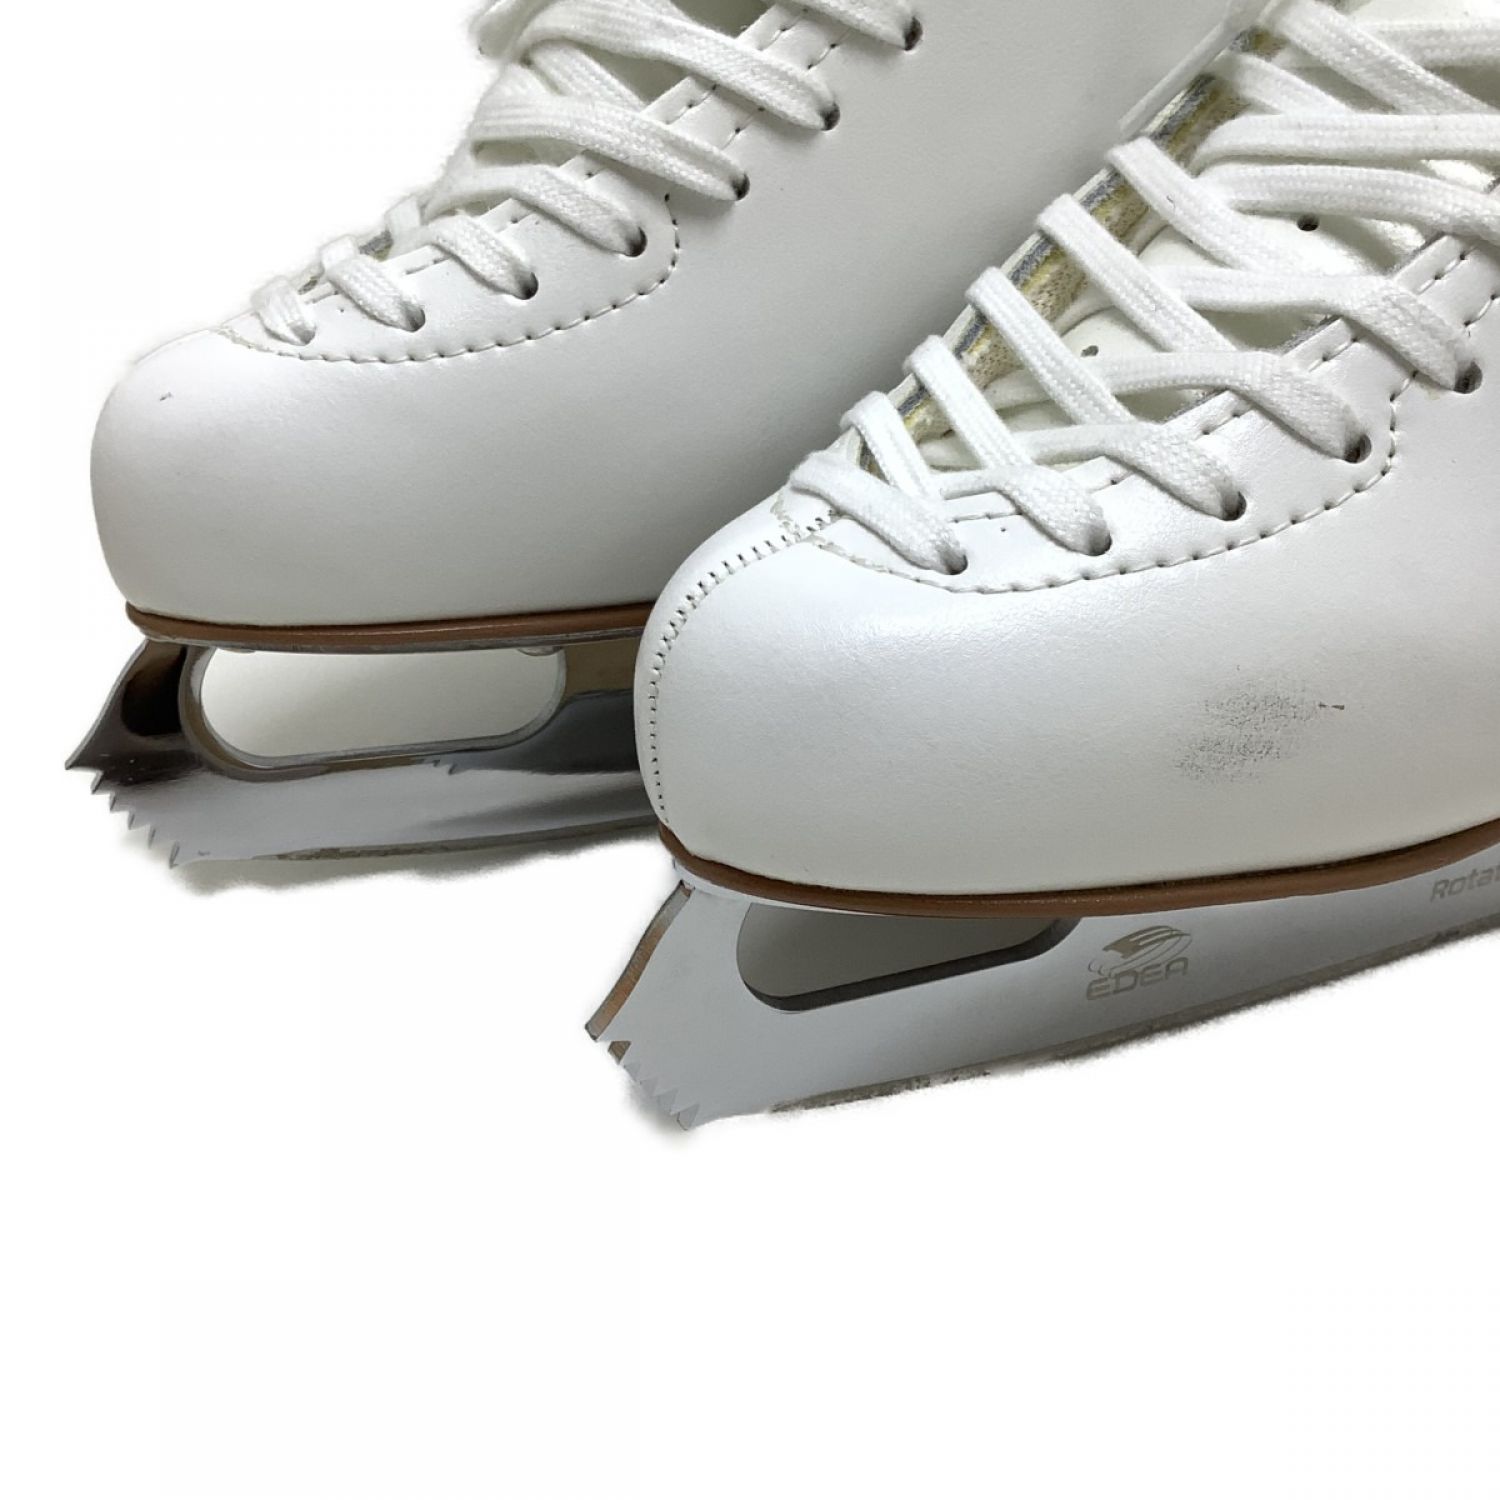 EDEA SKATES フィギュアスケートシューズ23.5cm | www.pituca.com.br